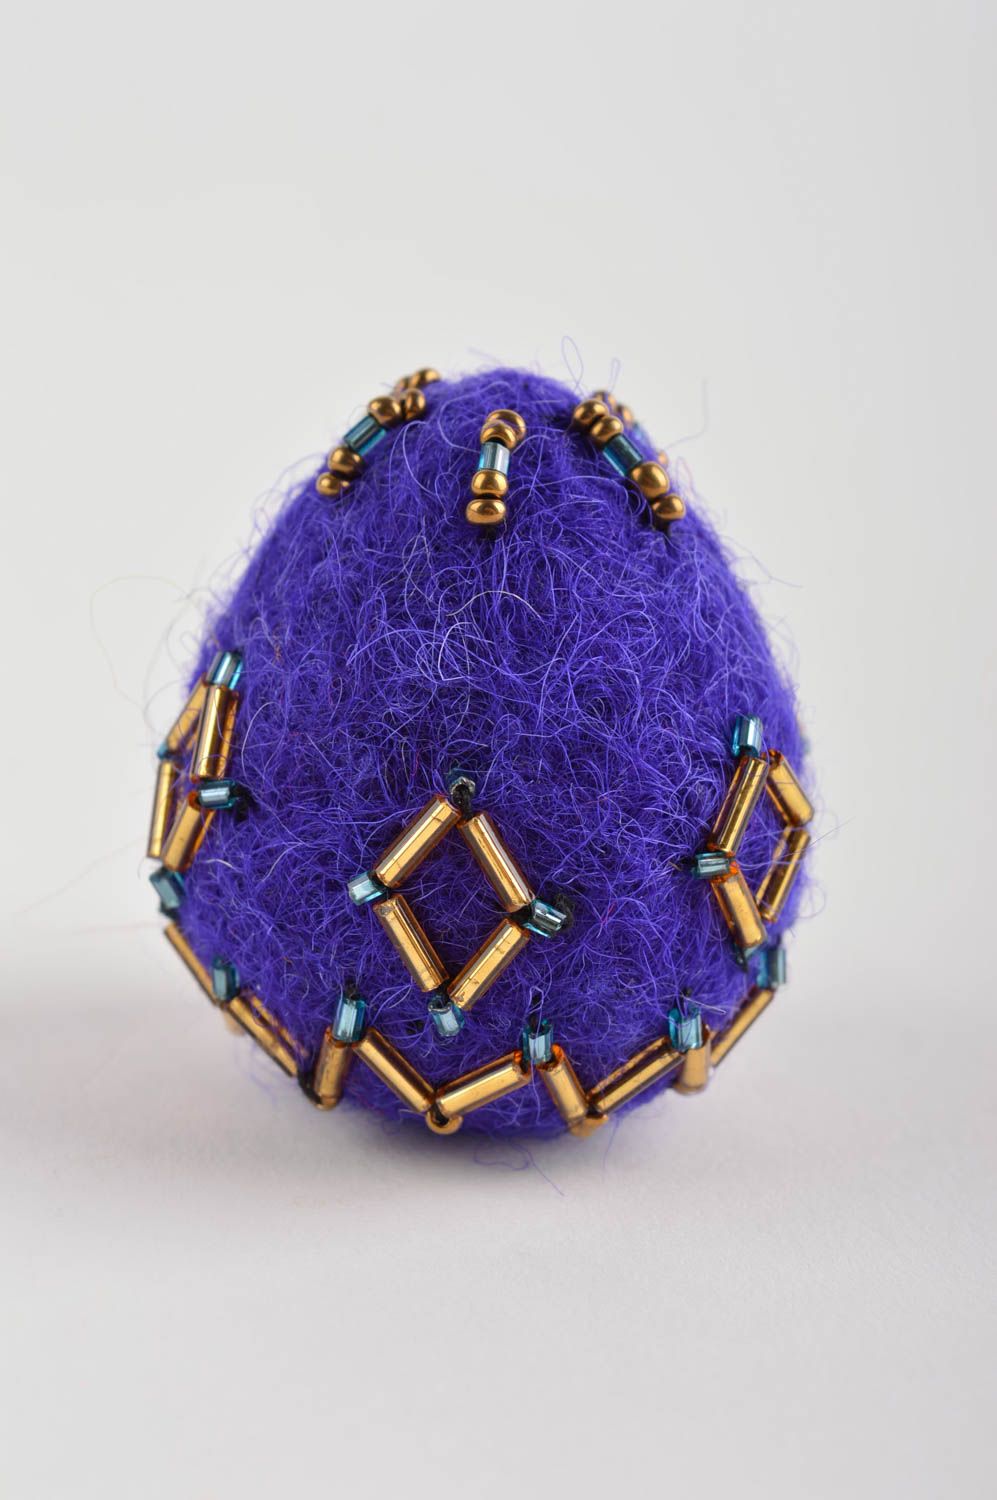 Handmade Easter decor ideas stylish violet interior egg decorative use only photo 2